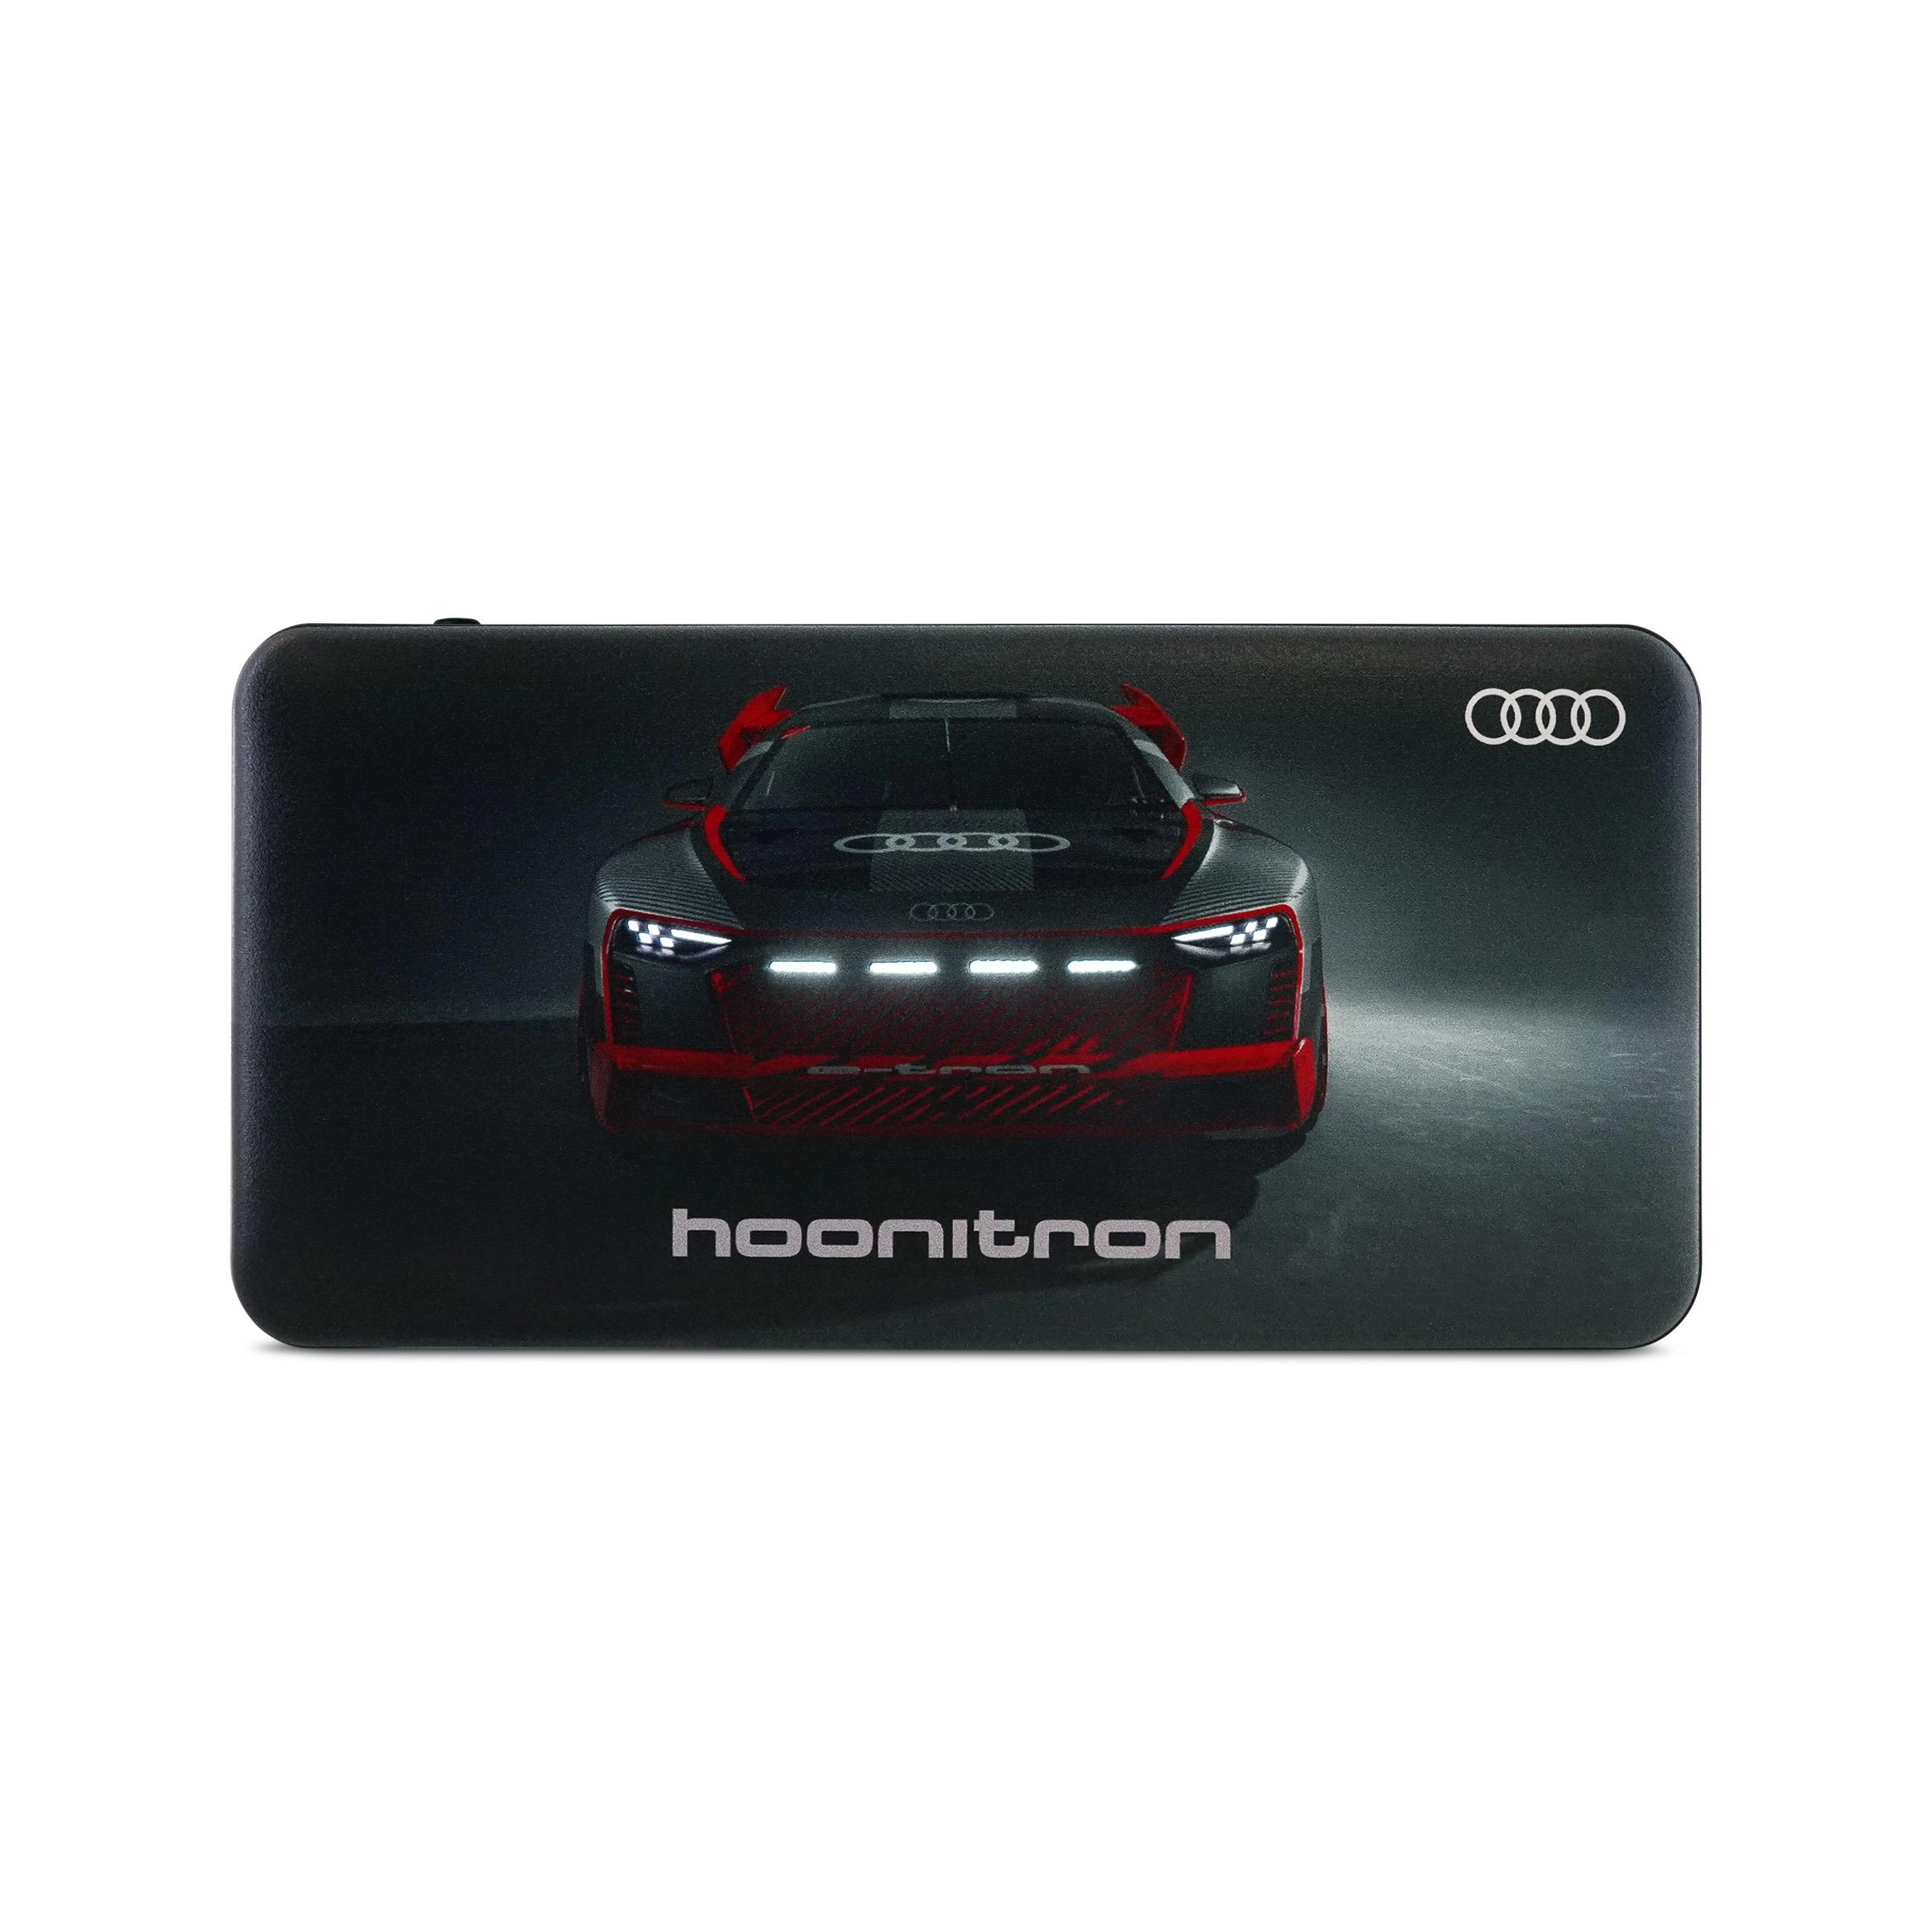 Audi Sport Powerbank 10.000 mAh hoonitron schwarz 3292200900